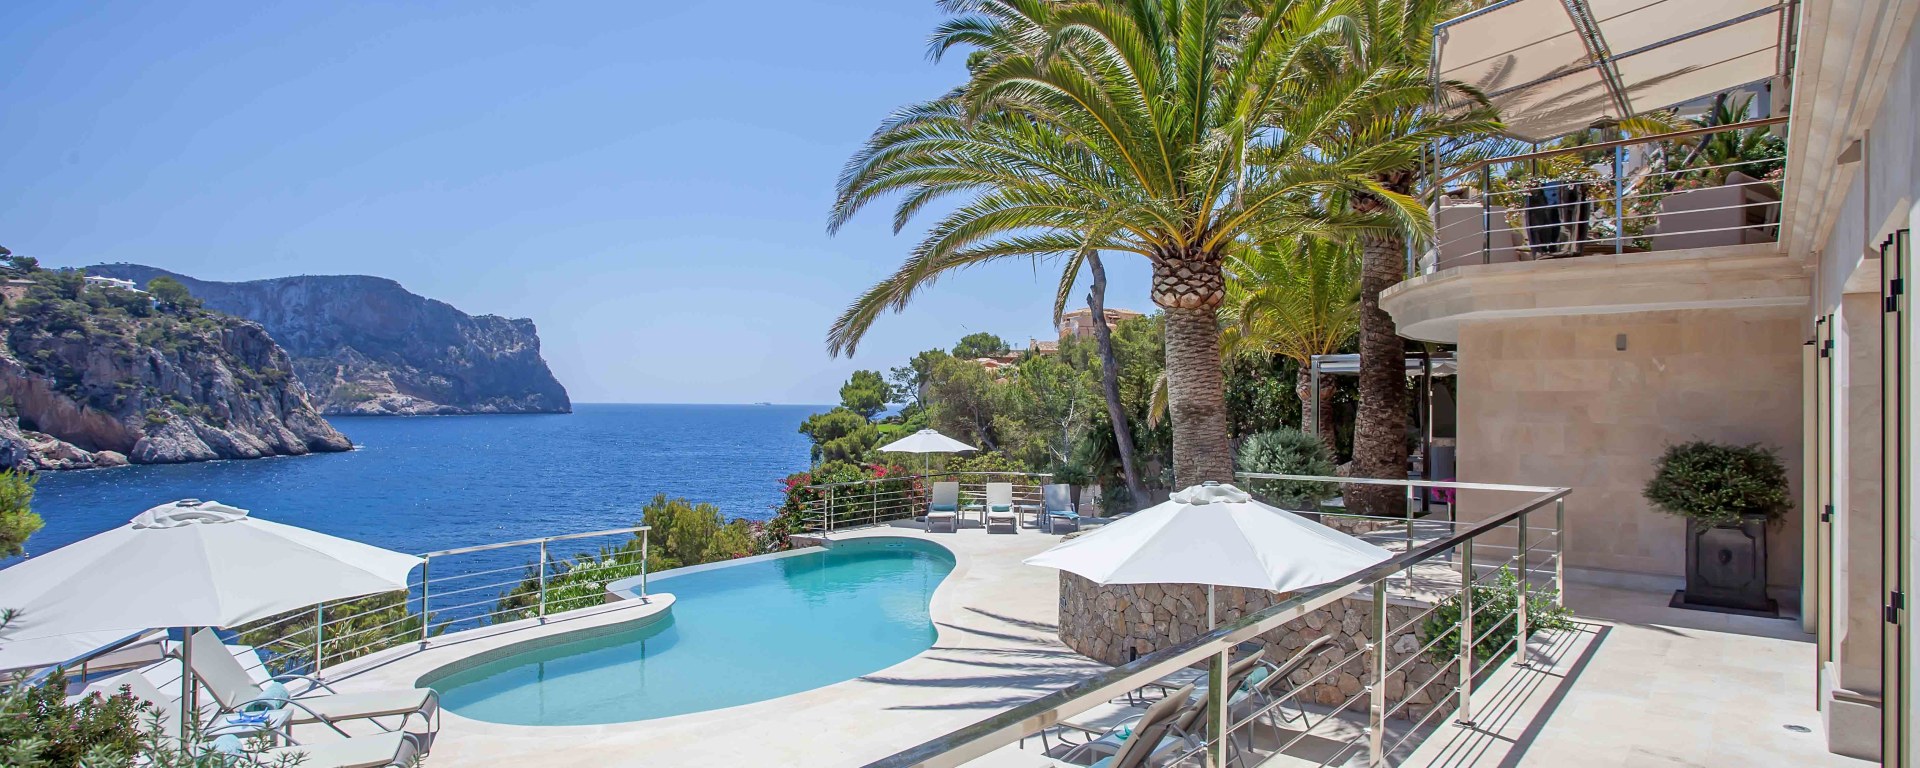 Luxus Ferienhaus Auf Mallorca - Villa Port Andratx View